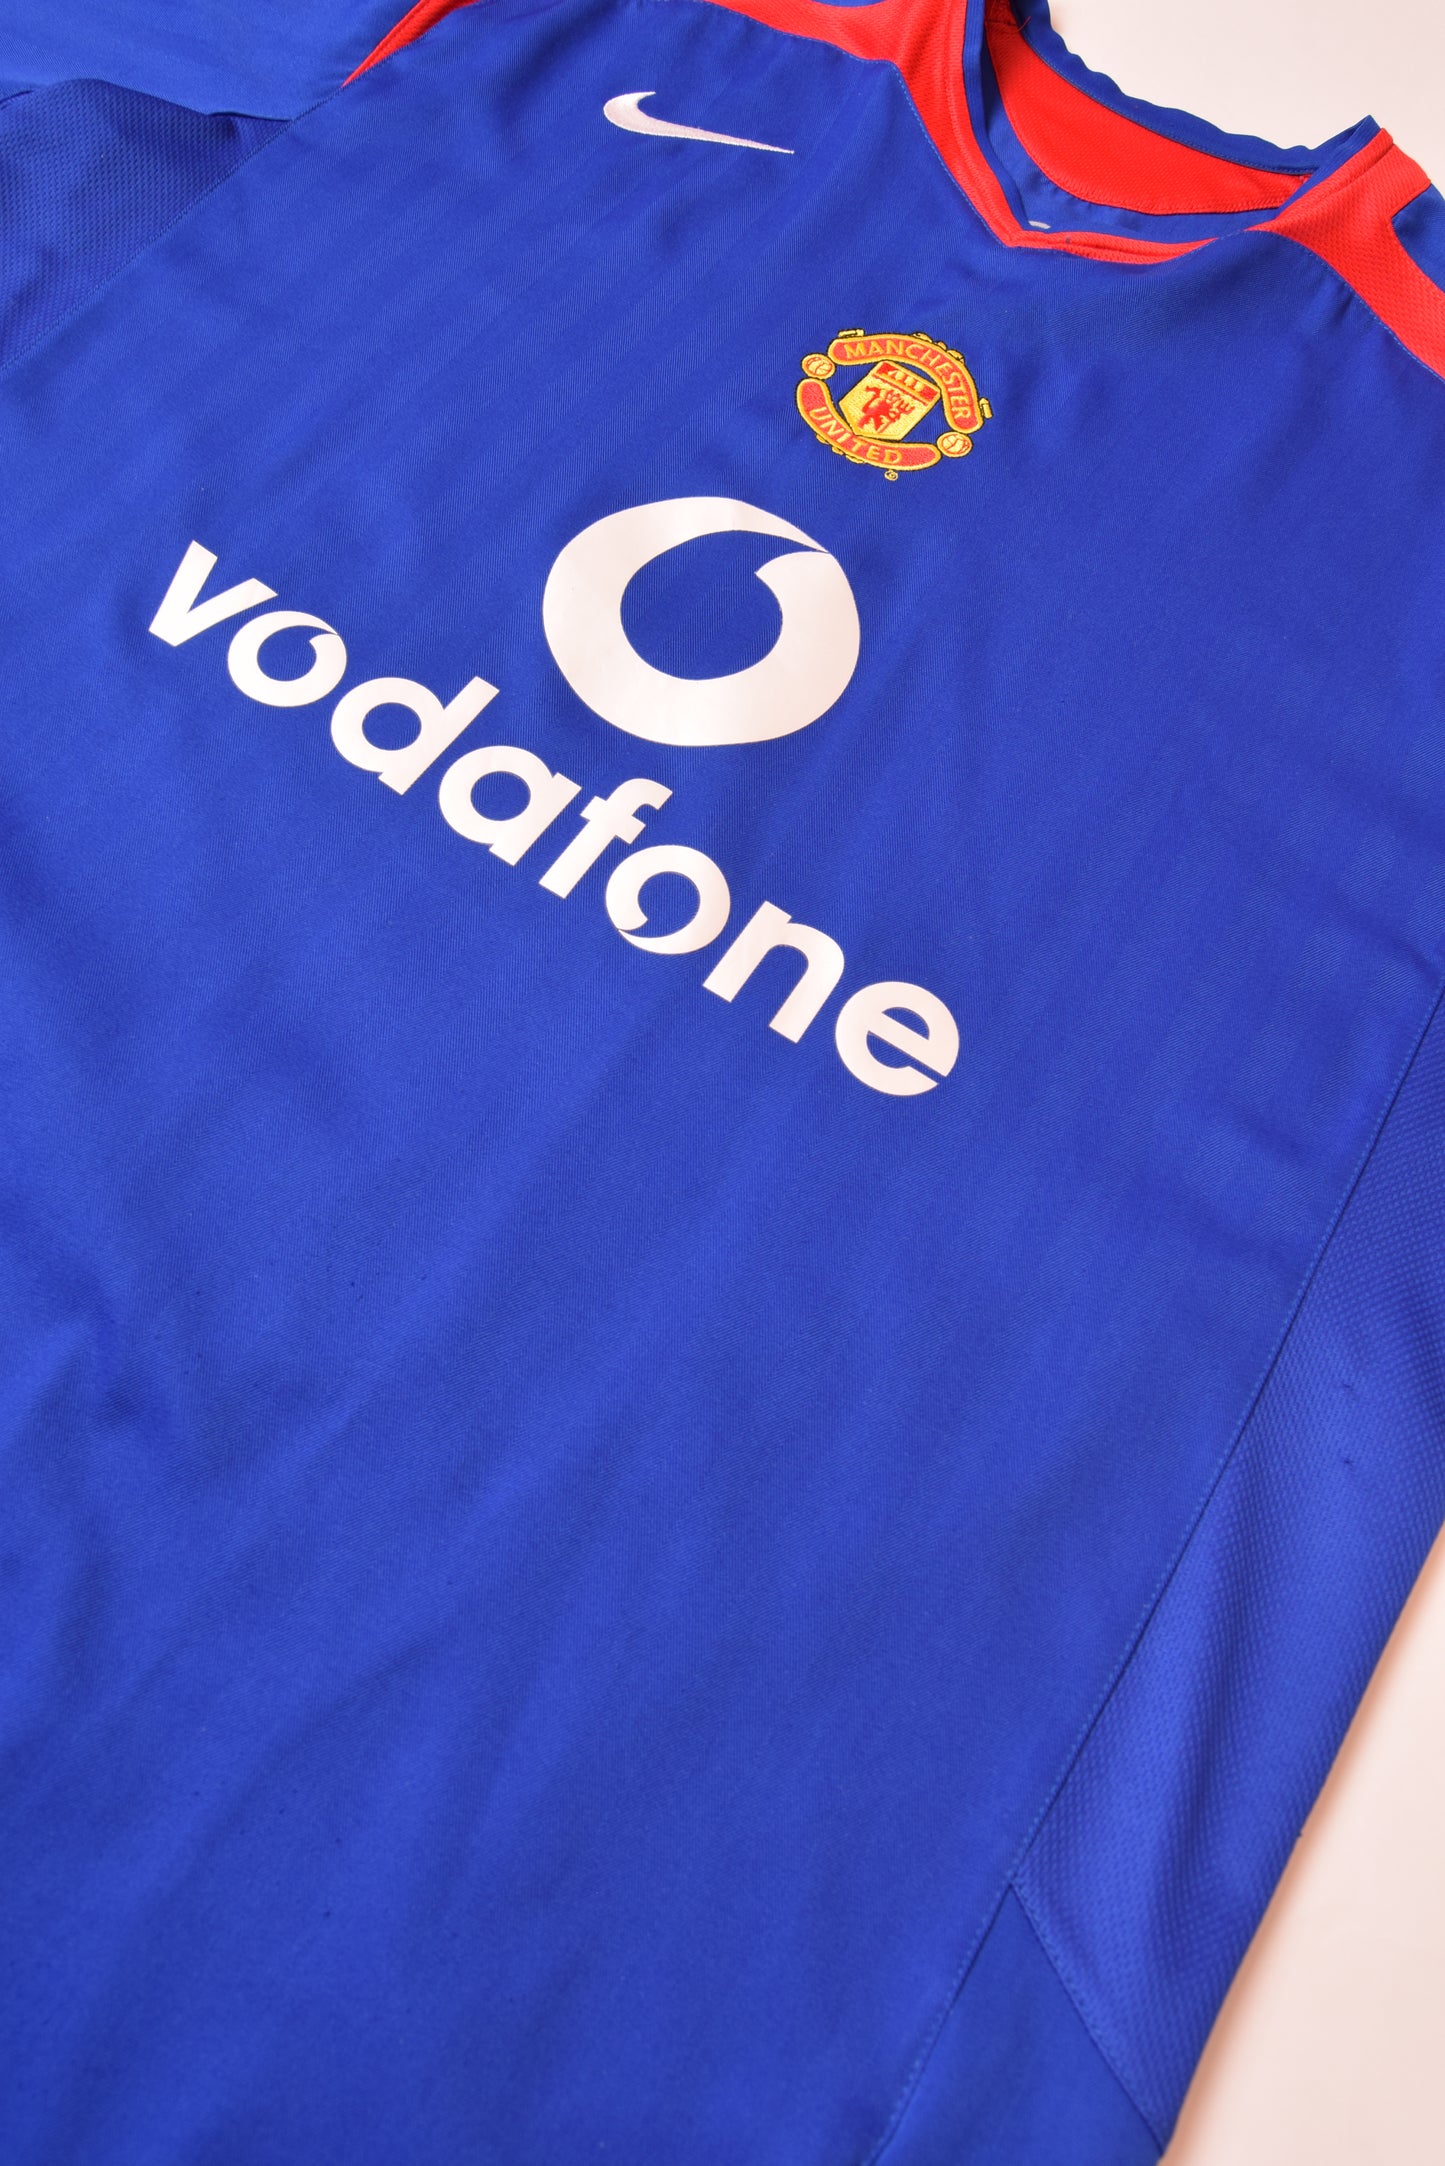 Nike Manchester United 2005-2006 Away Football Shirt Vodafone Blue